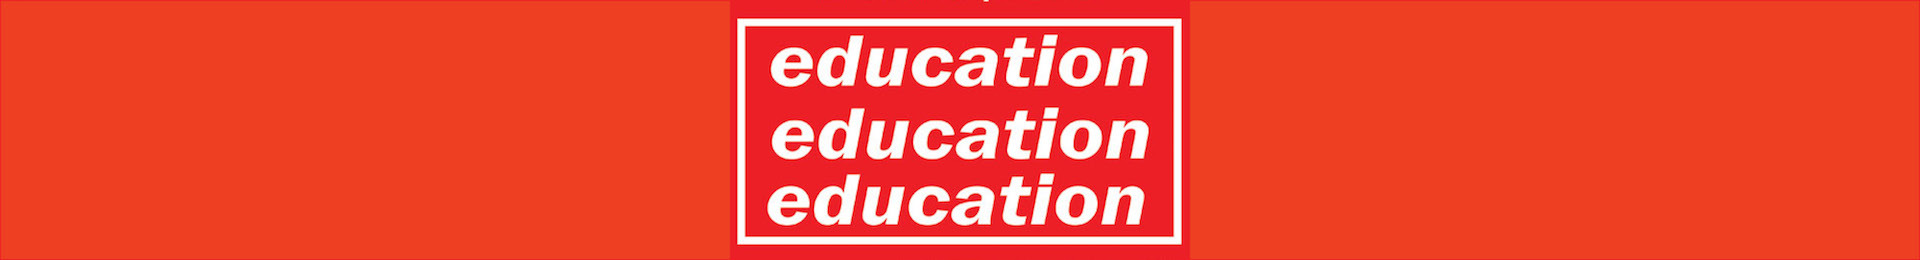 Education, Education, Education banner image